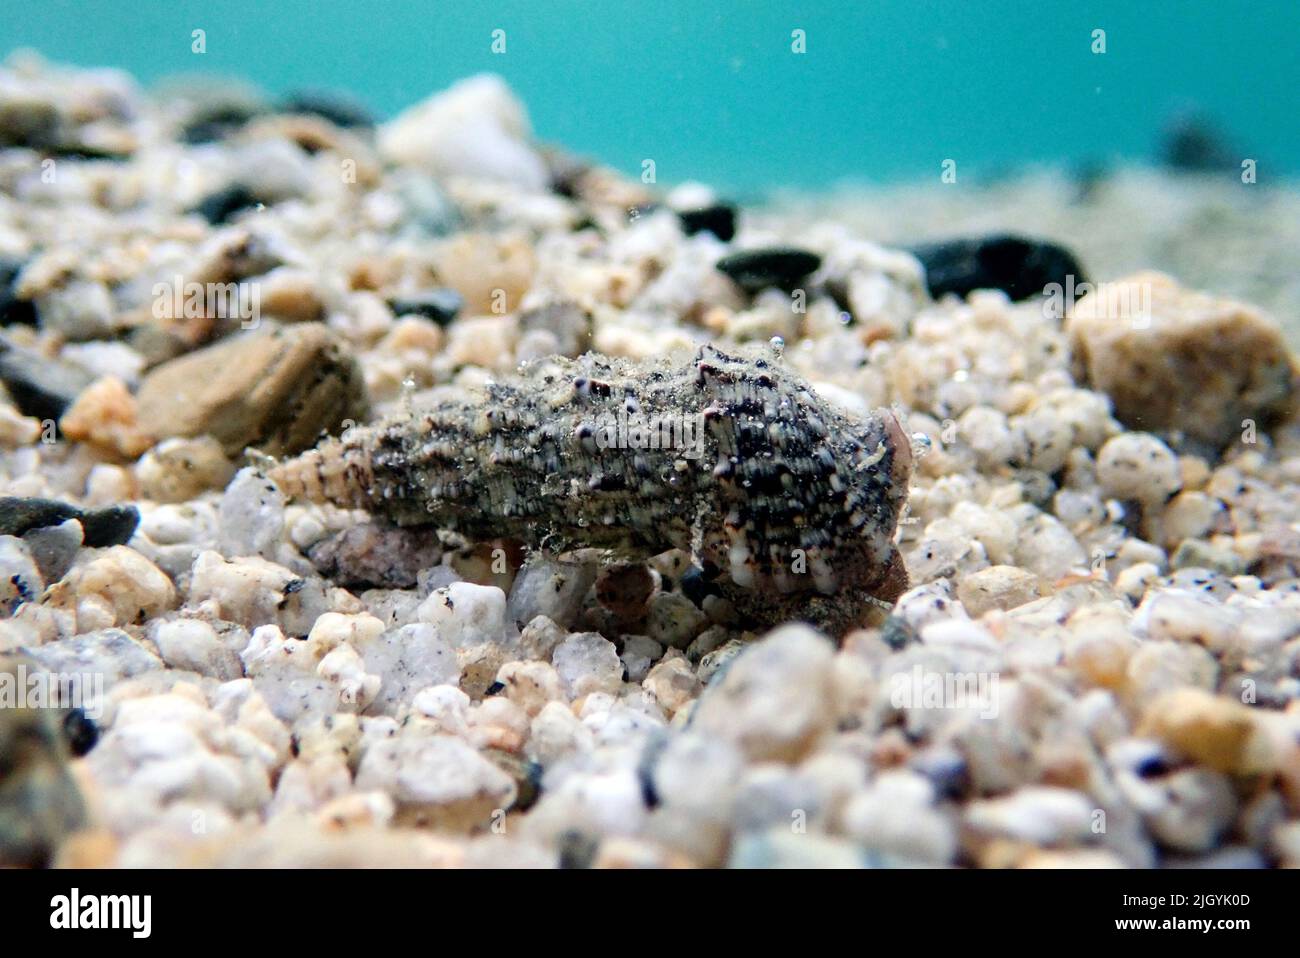 Cerith sand sea snail - Cerithium Caeruleum Stock Photo